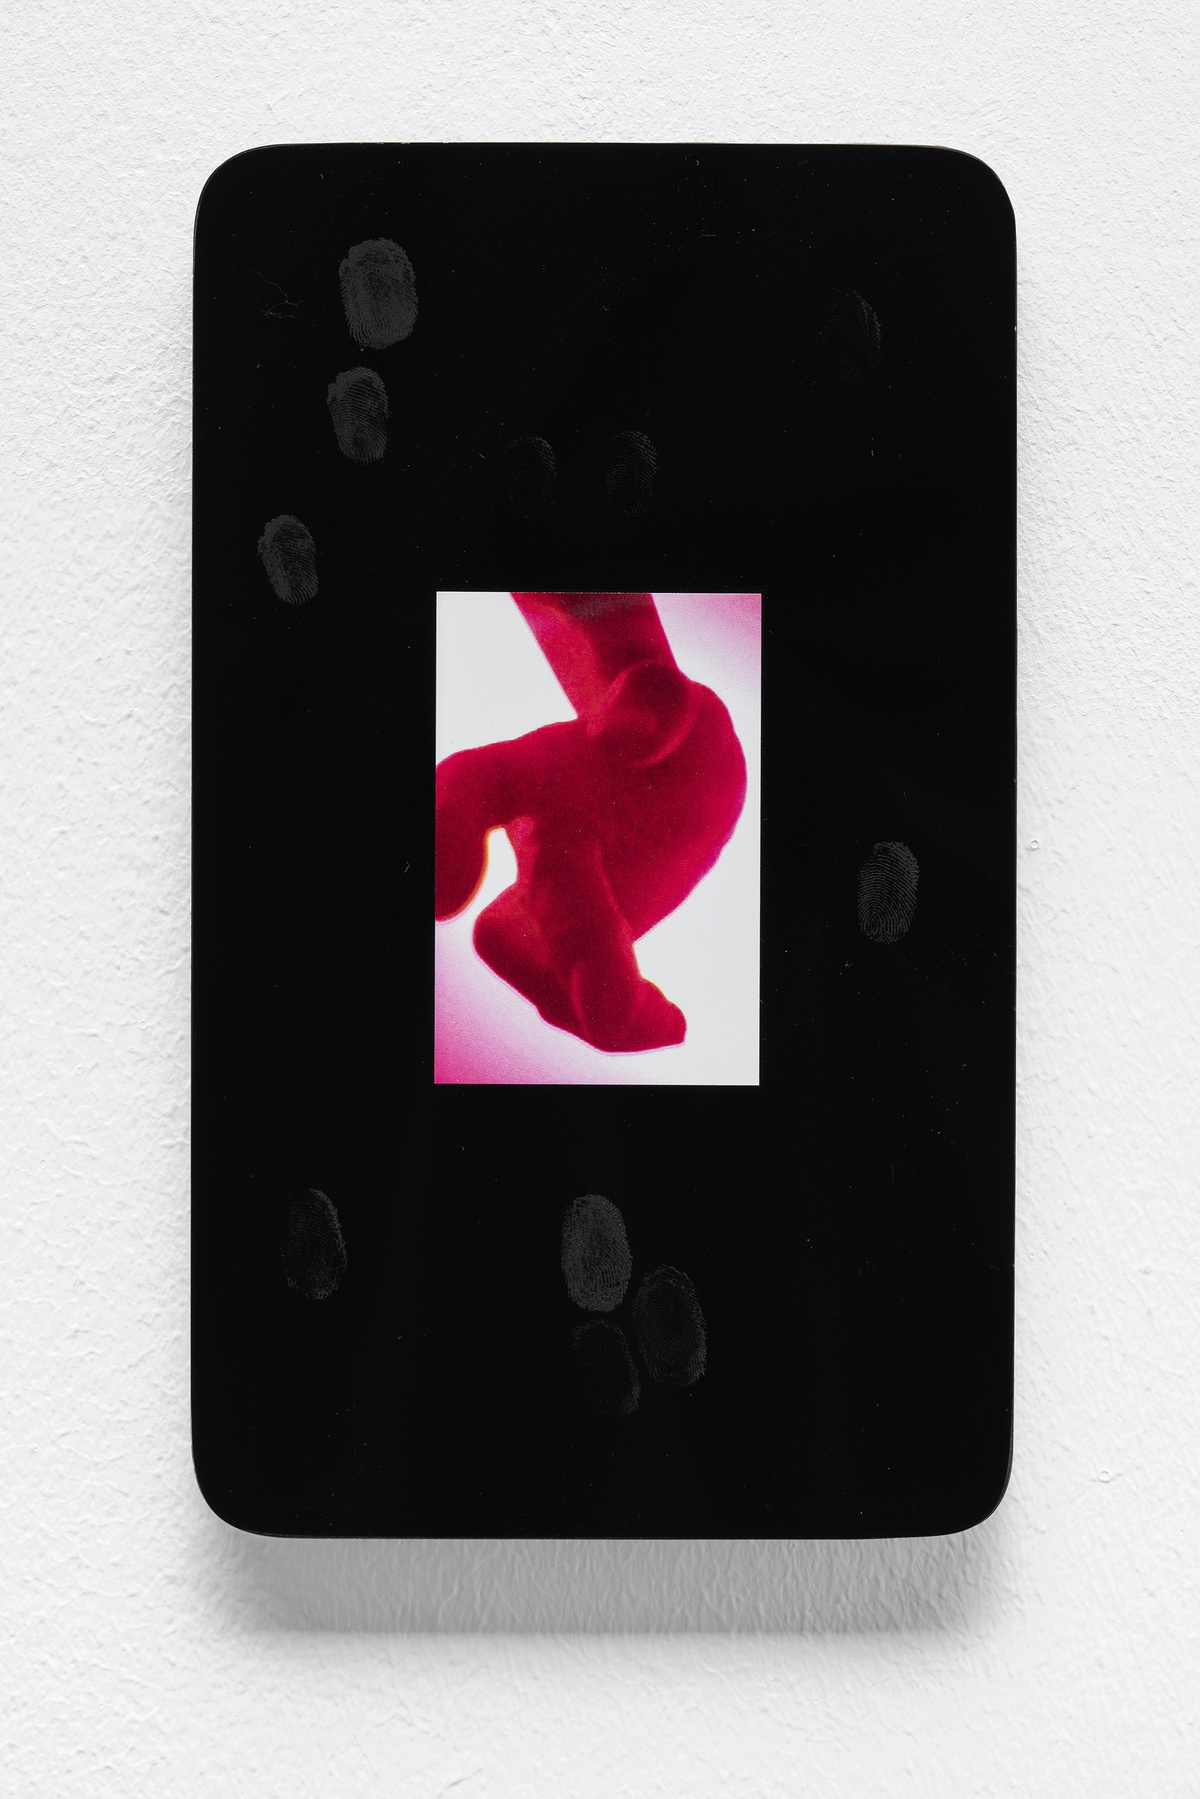 Jenna Bliss, Friendship #7plexiglass, UV print of iSight webcam photo, acrylic paint12.7 × 21.6 × 0.95 cm